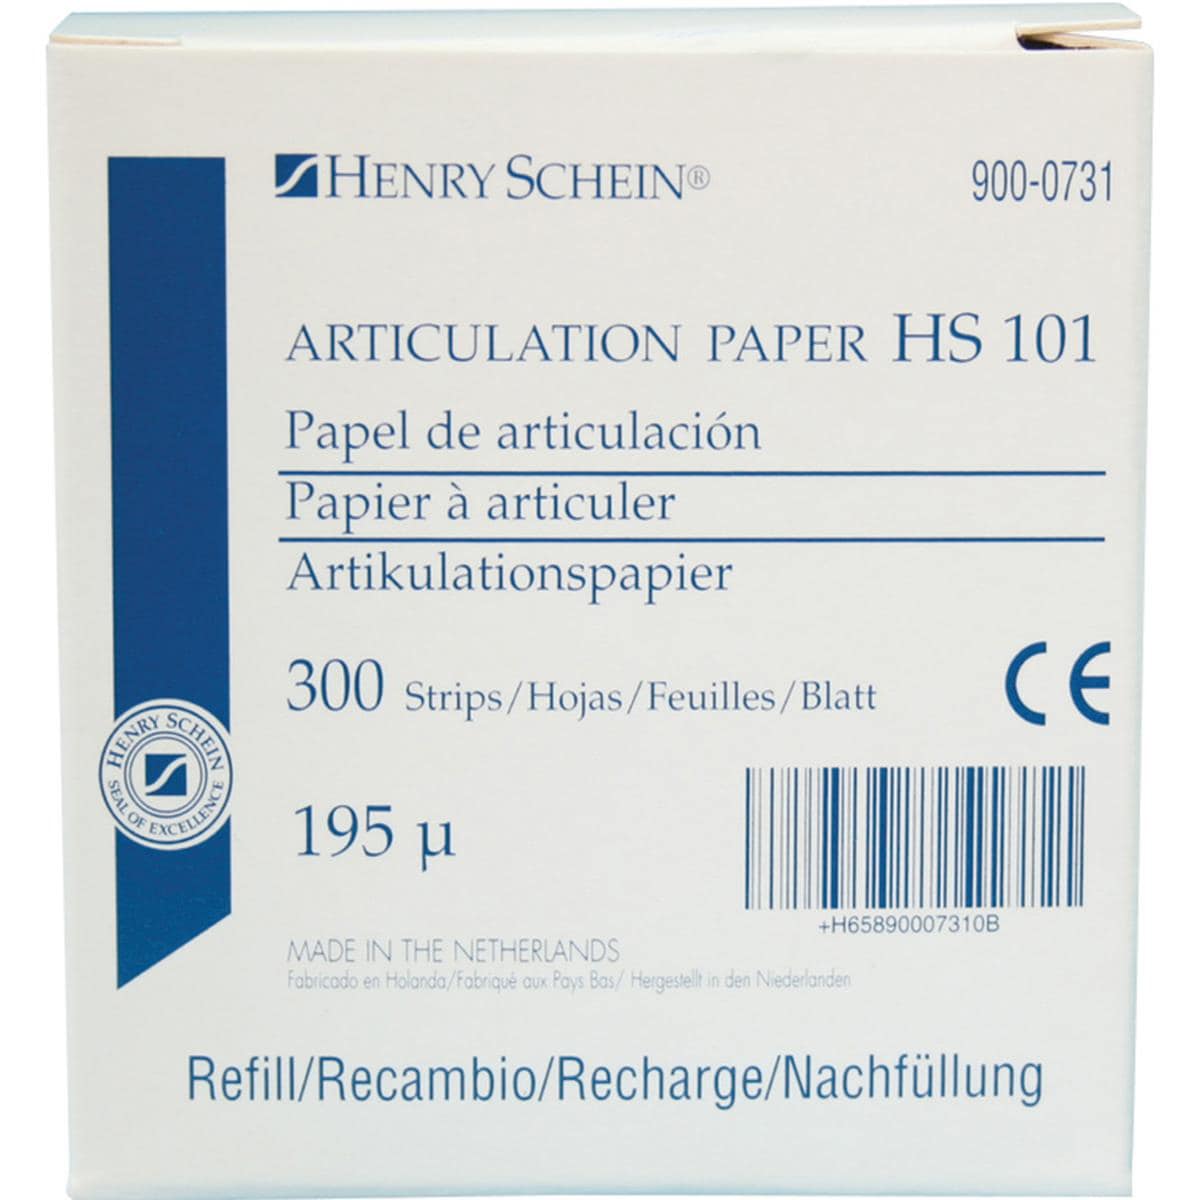 HS Articulating Paper Dispenser Refill 195 microns 300 sheets